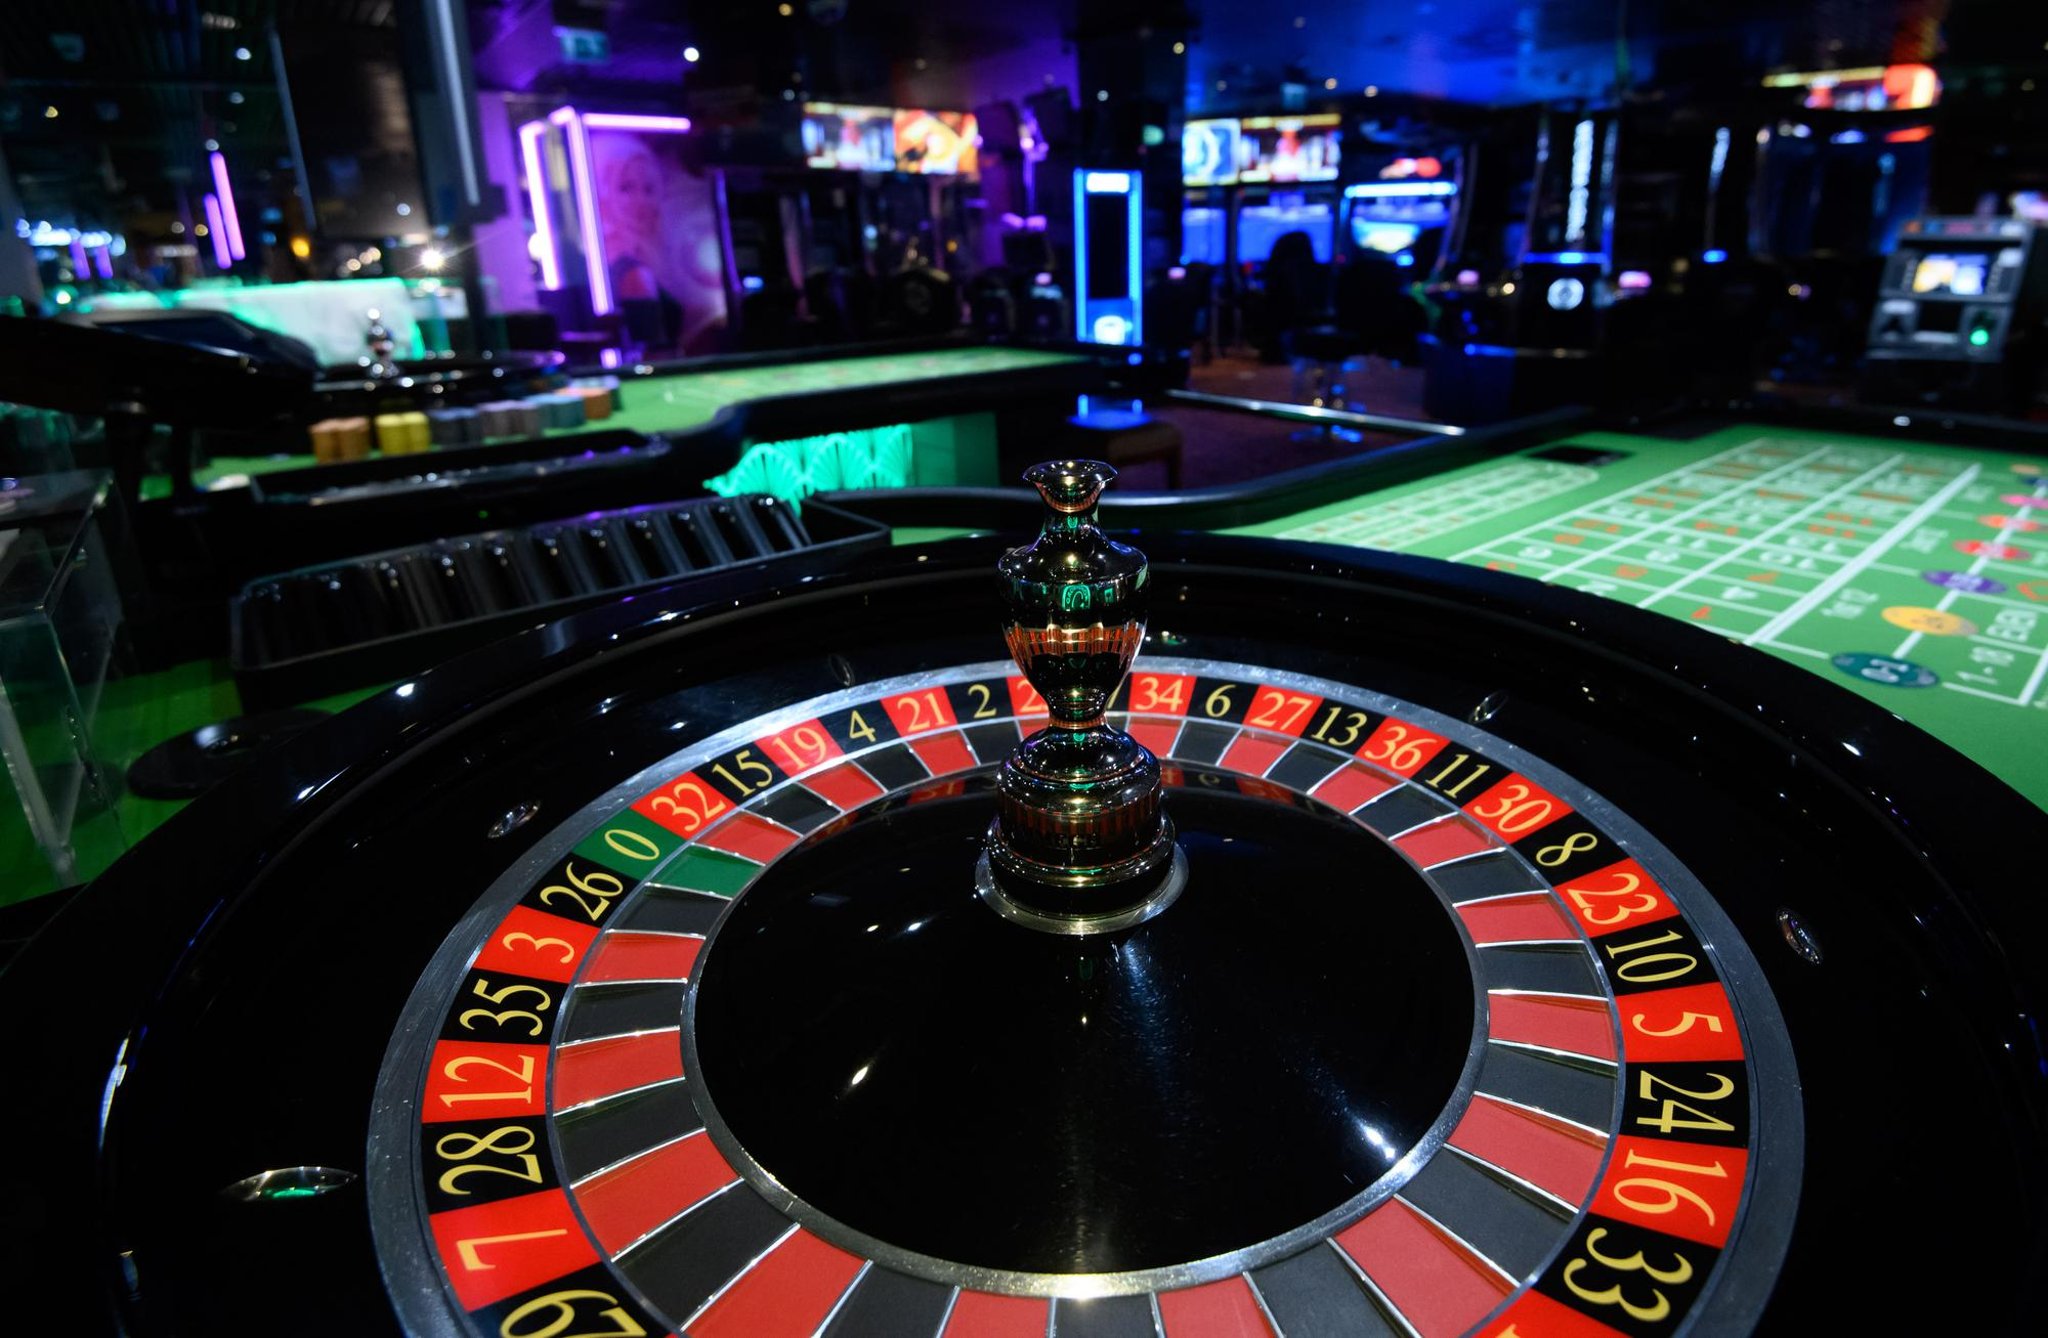 Edinburgh's Maybury Casino will reveals when it will reopen | Edinburgh News